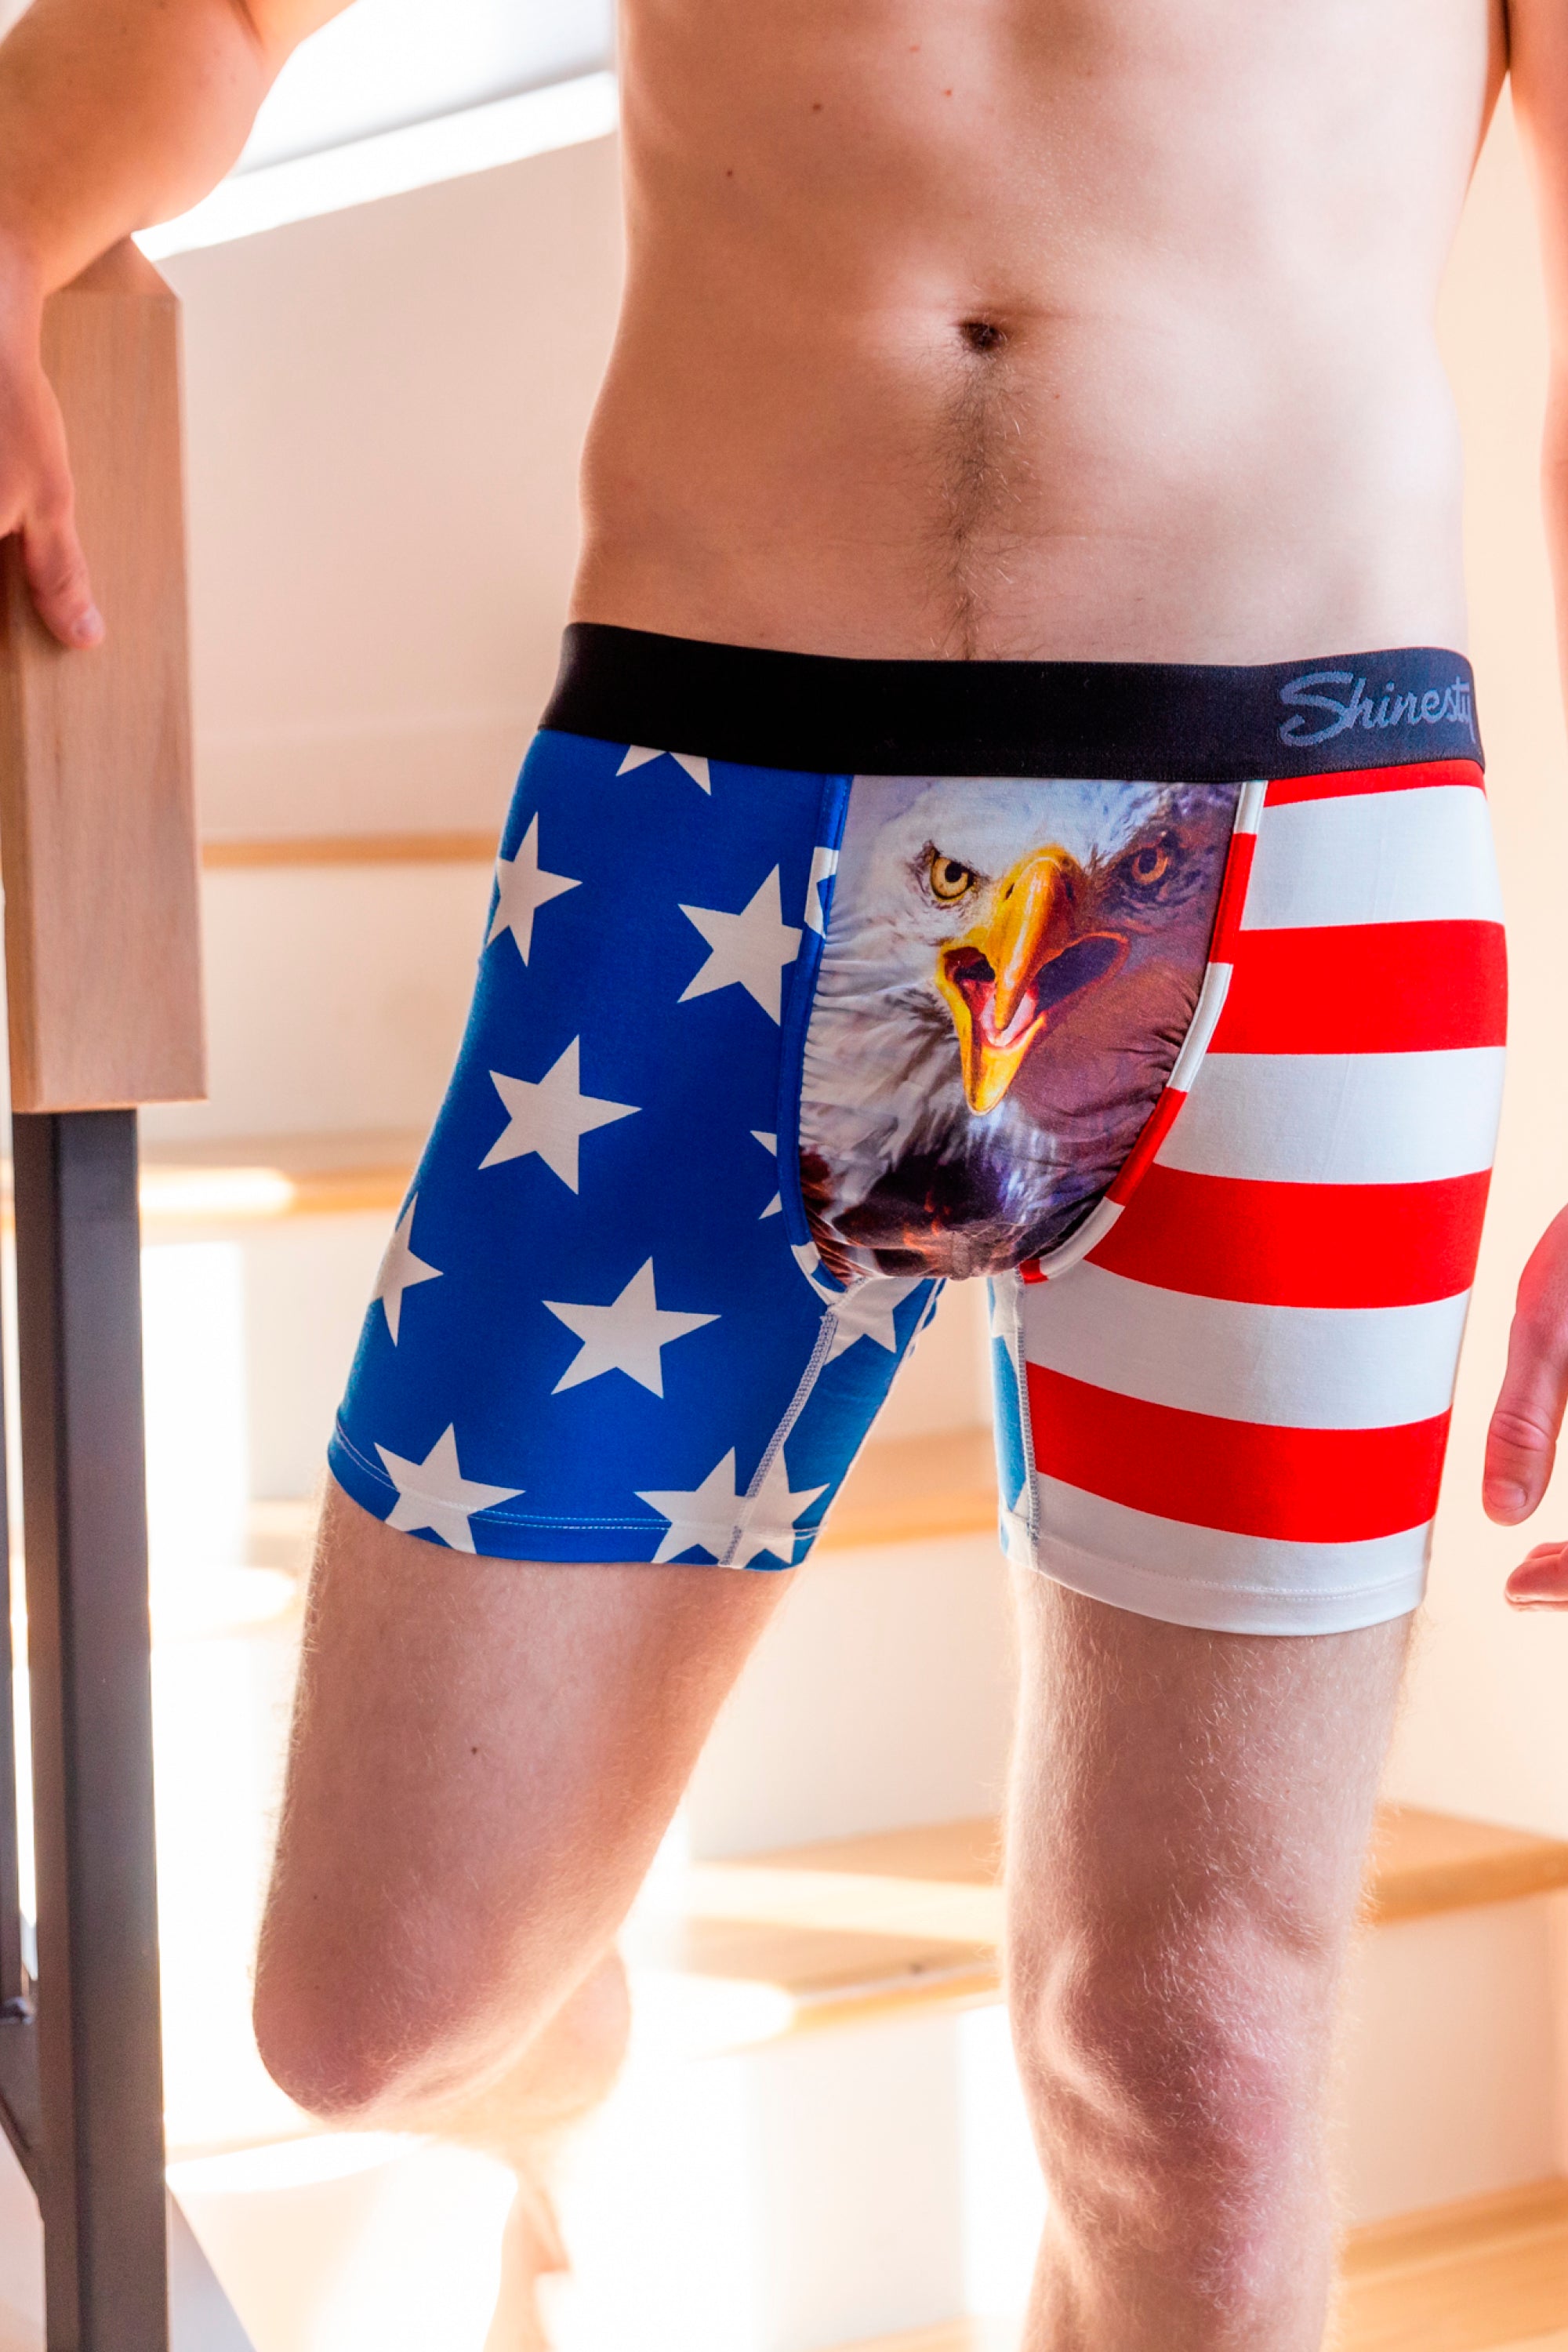 The Mascot - Shinesty American Flag Ball Hammock Pouch Underwear